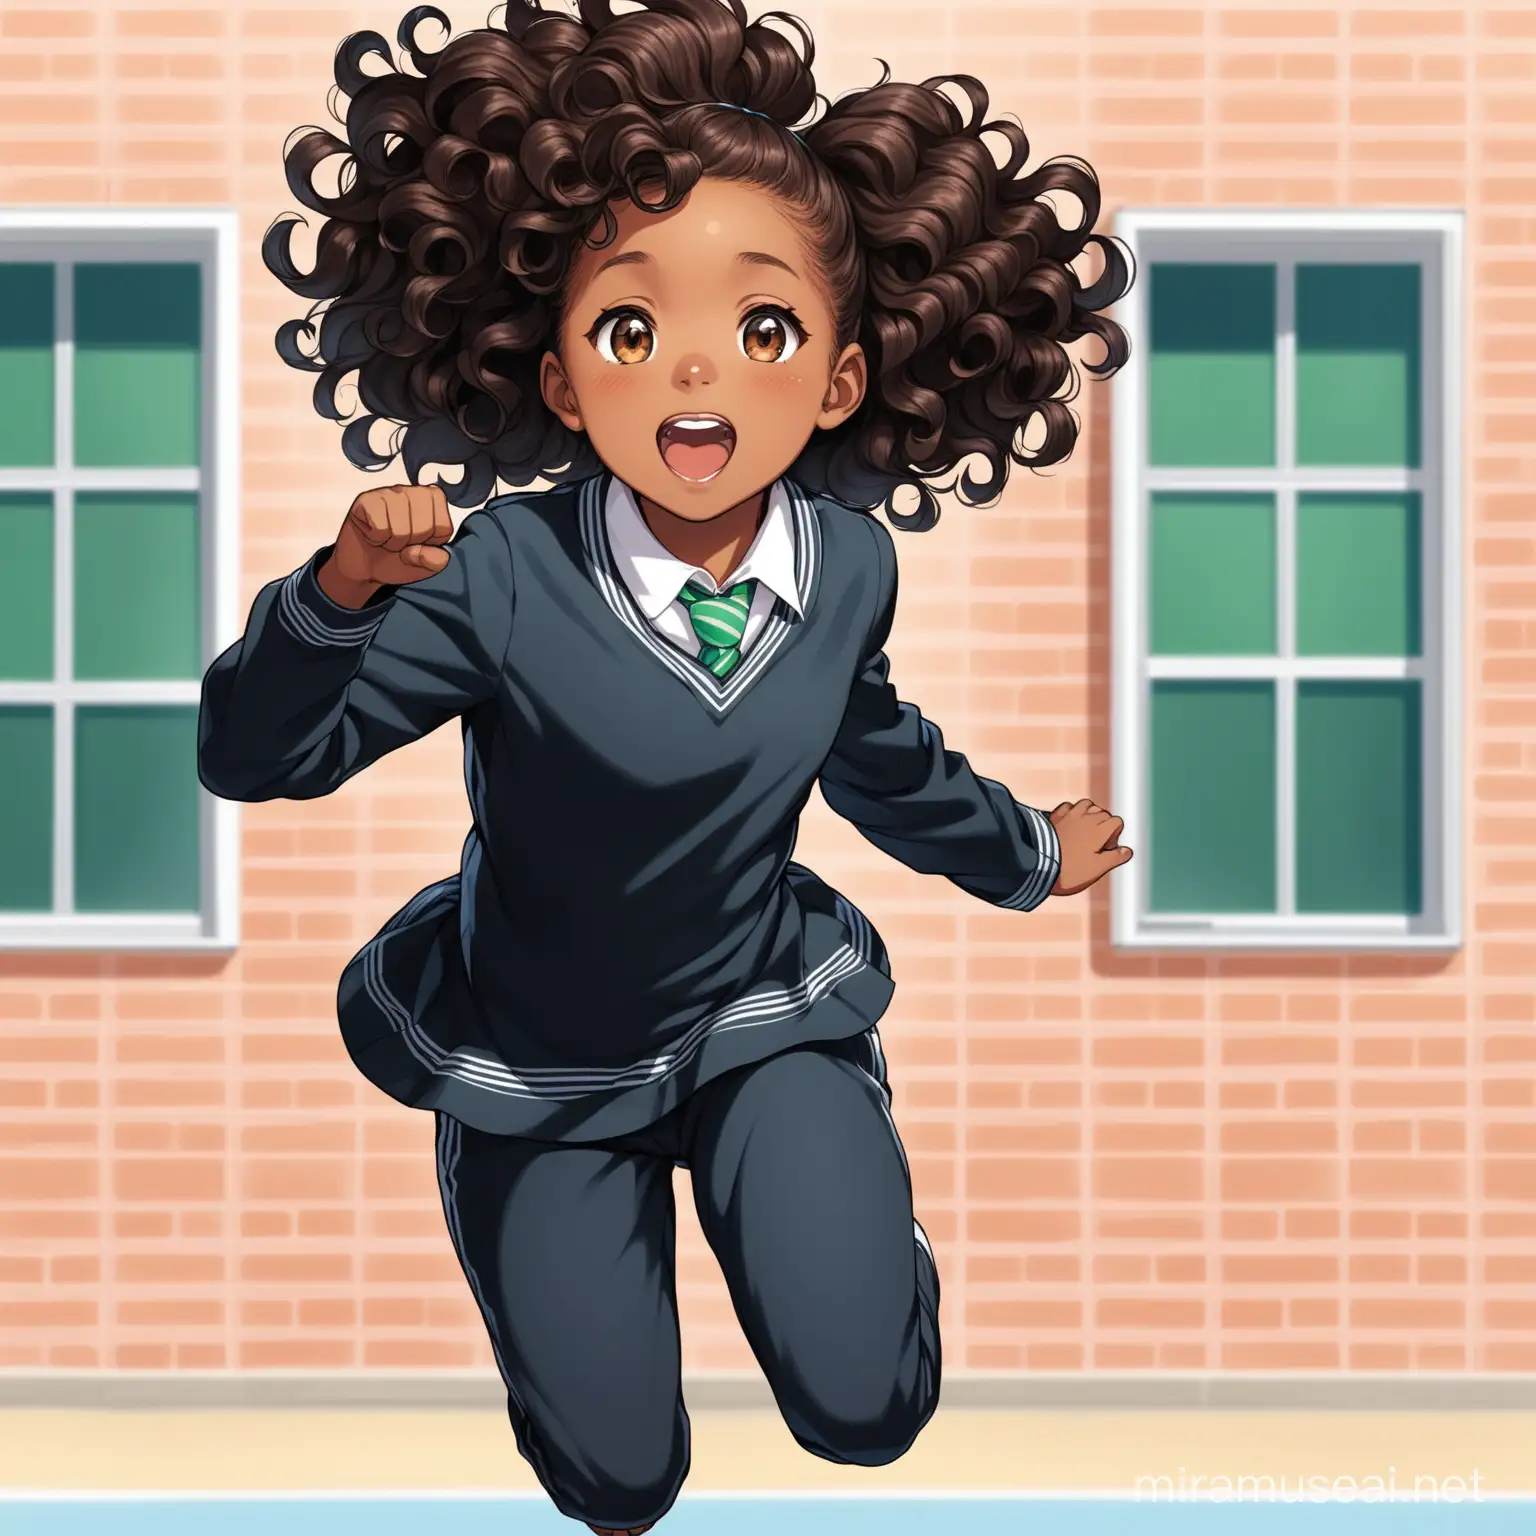 Joyful Black Girl Jumping in Front of School Building